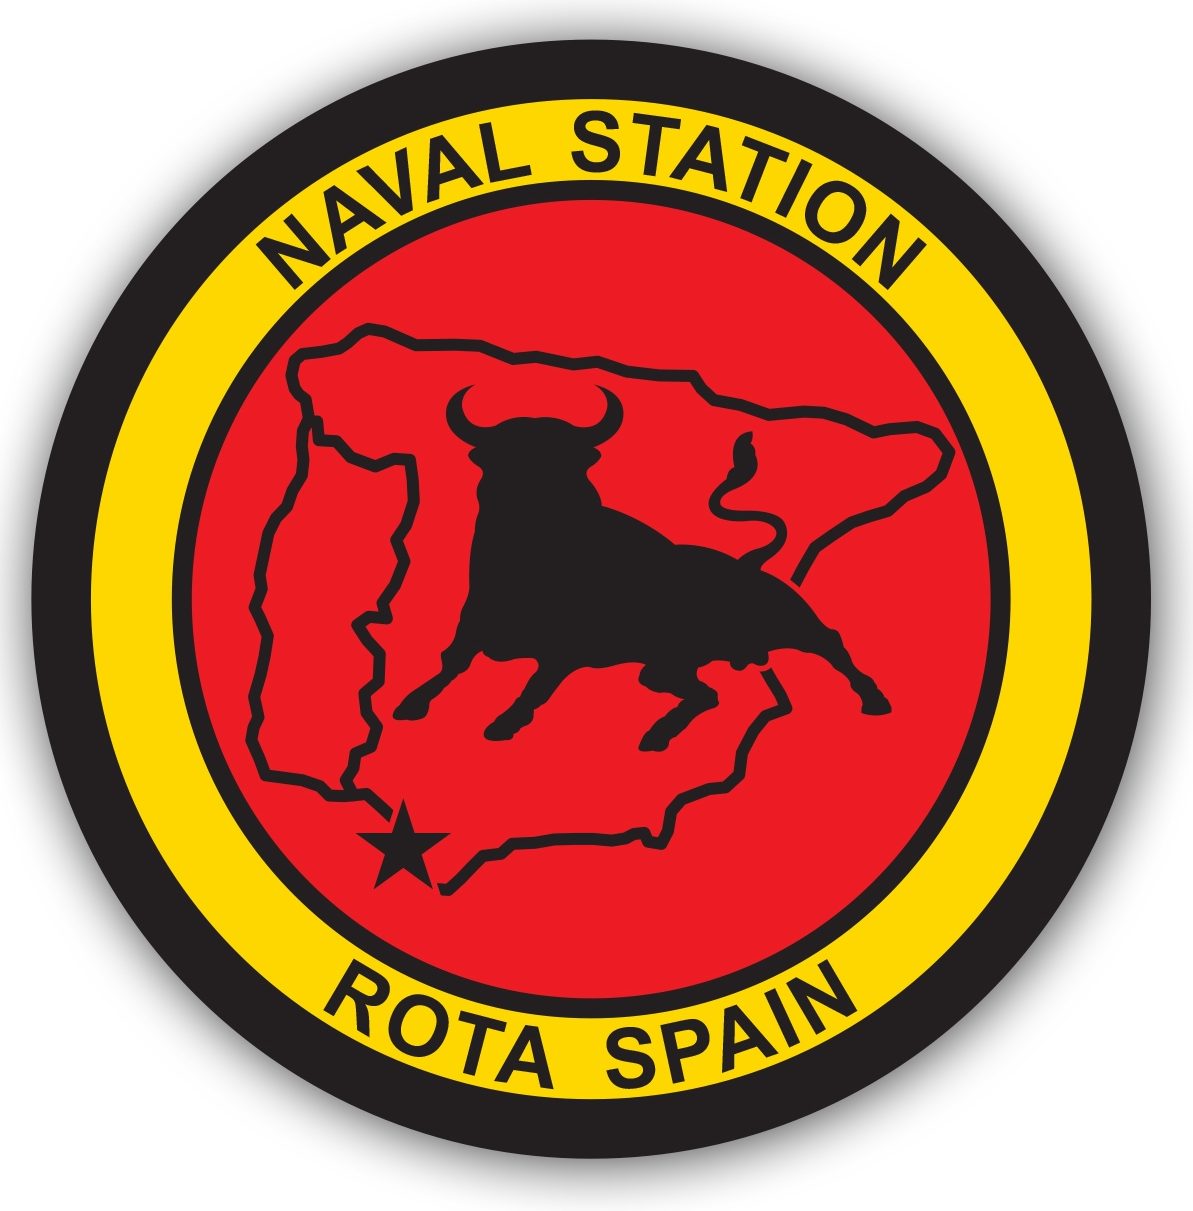 Naval Station Rota